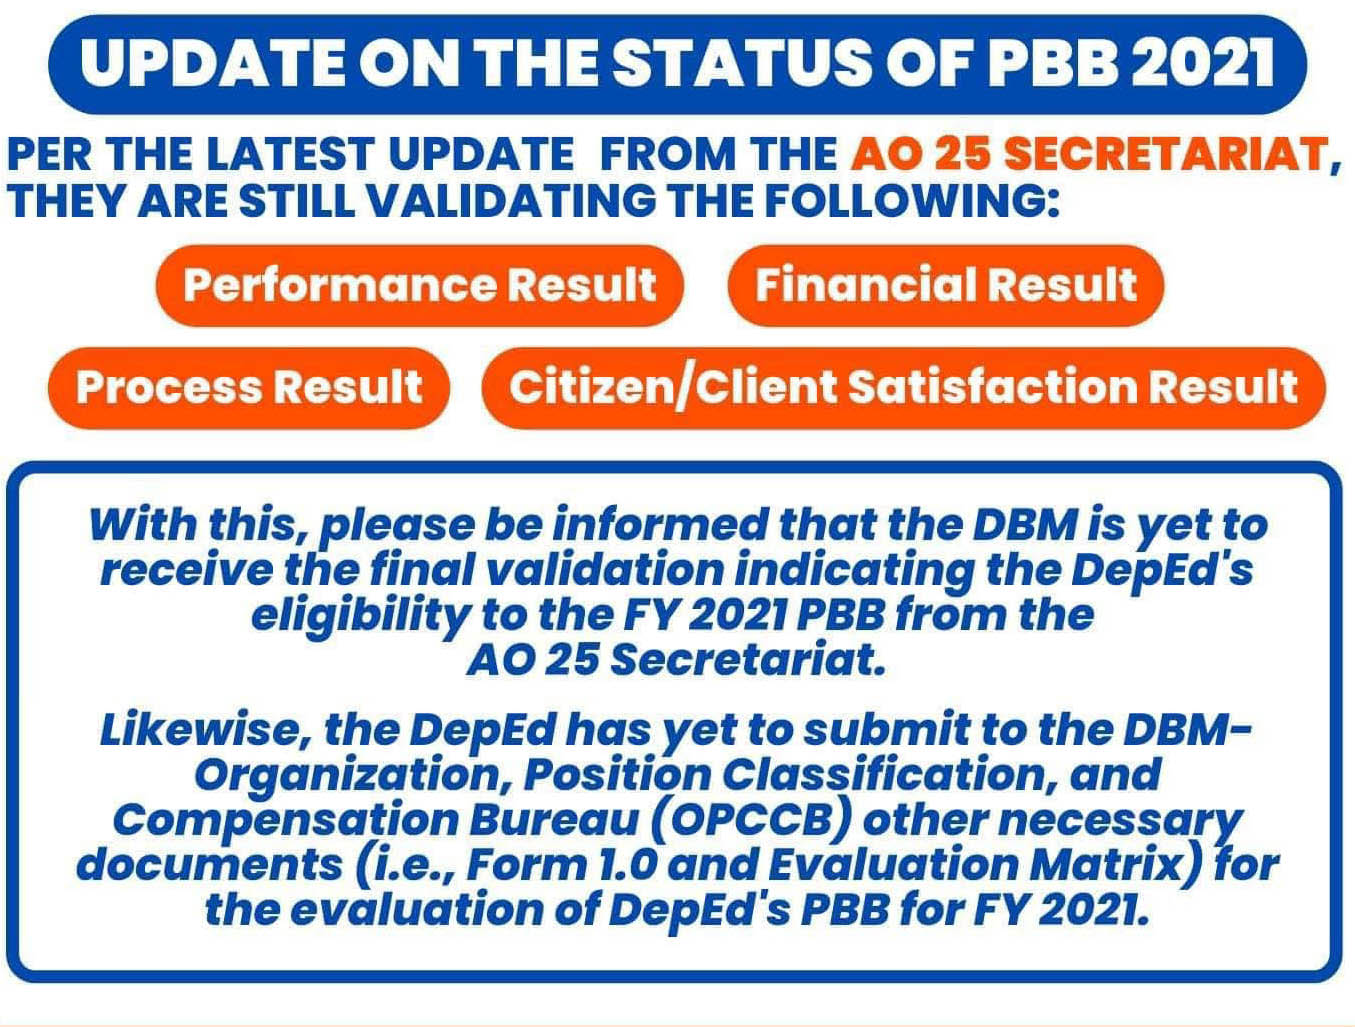 Update on PerformanceBased Bonus ( PBB) 2021 for DepEd personnel as of